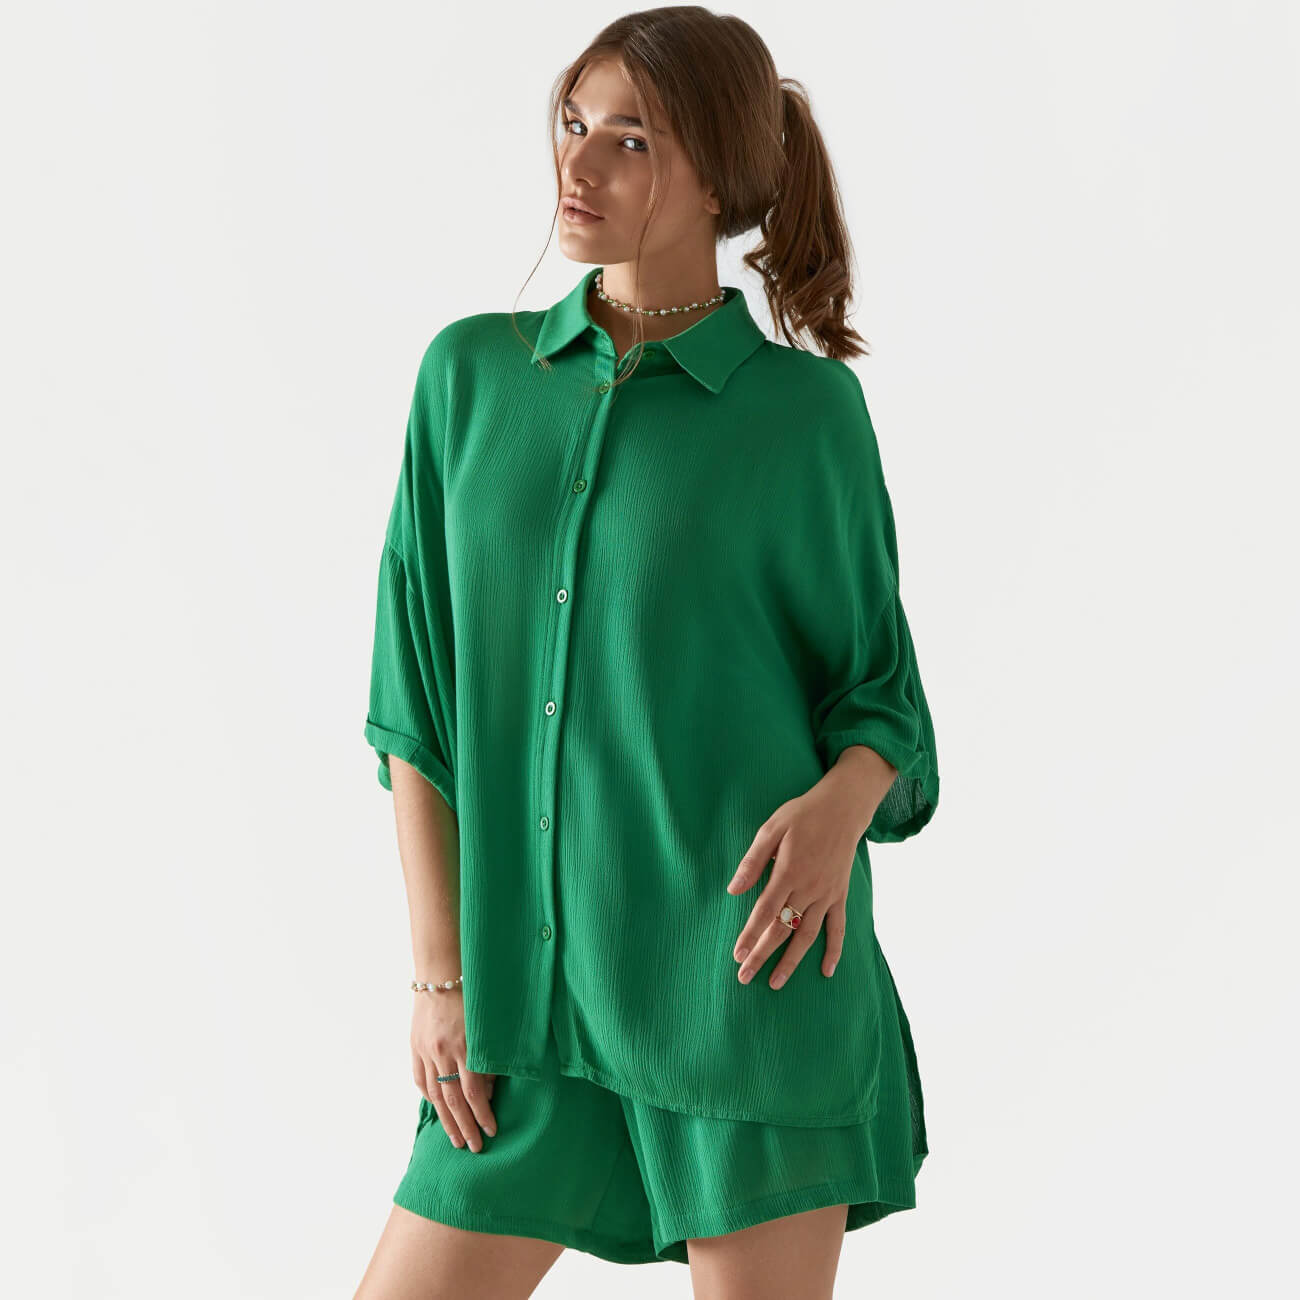 Рубашка женская, р. M, с коротким рукавом, вискоза, зеленая, Julie